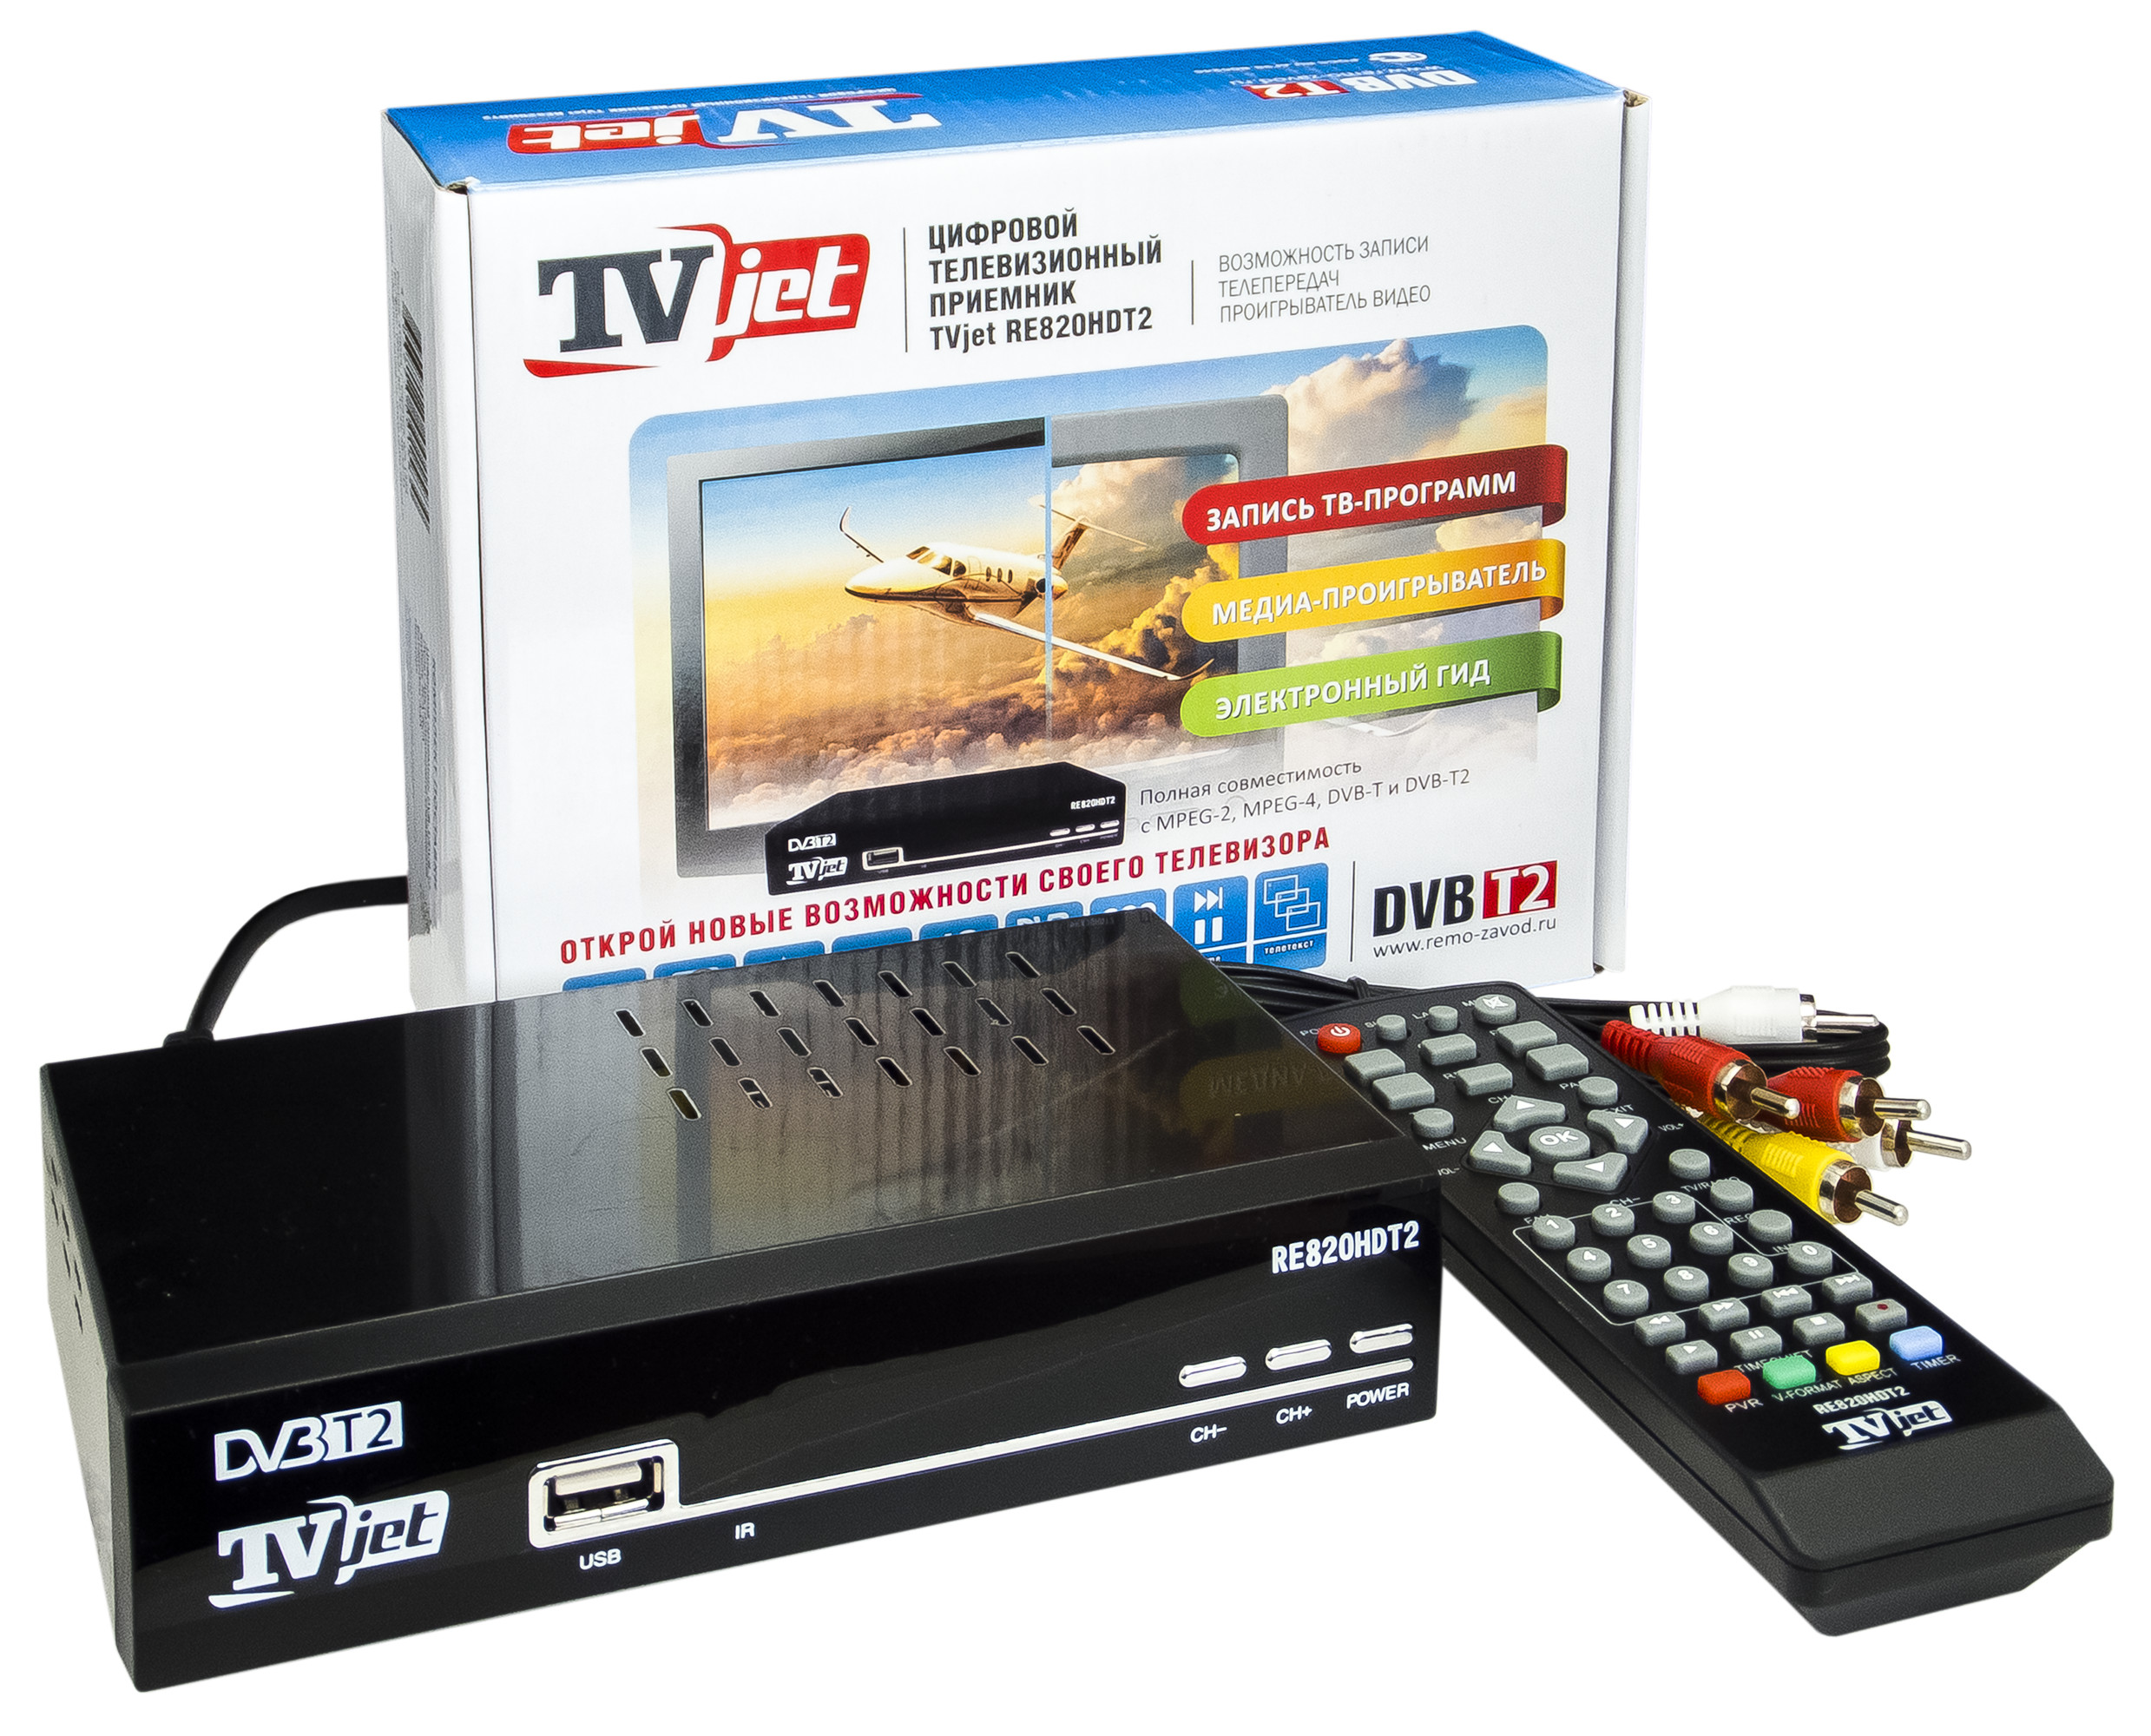 Тв приставки для телевизора что делать. TV-тюнер РЭМО TVJET re820hdt2. Приемник цифровой MPEG DVB t2. Цифровая приставка DVB-t2. Приставка с антенной для цифрового ТВ Jet.